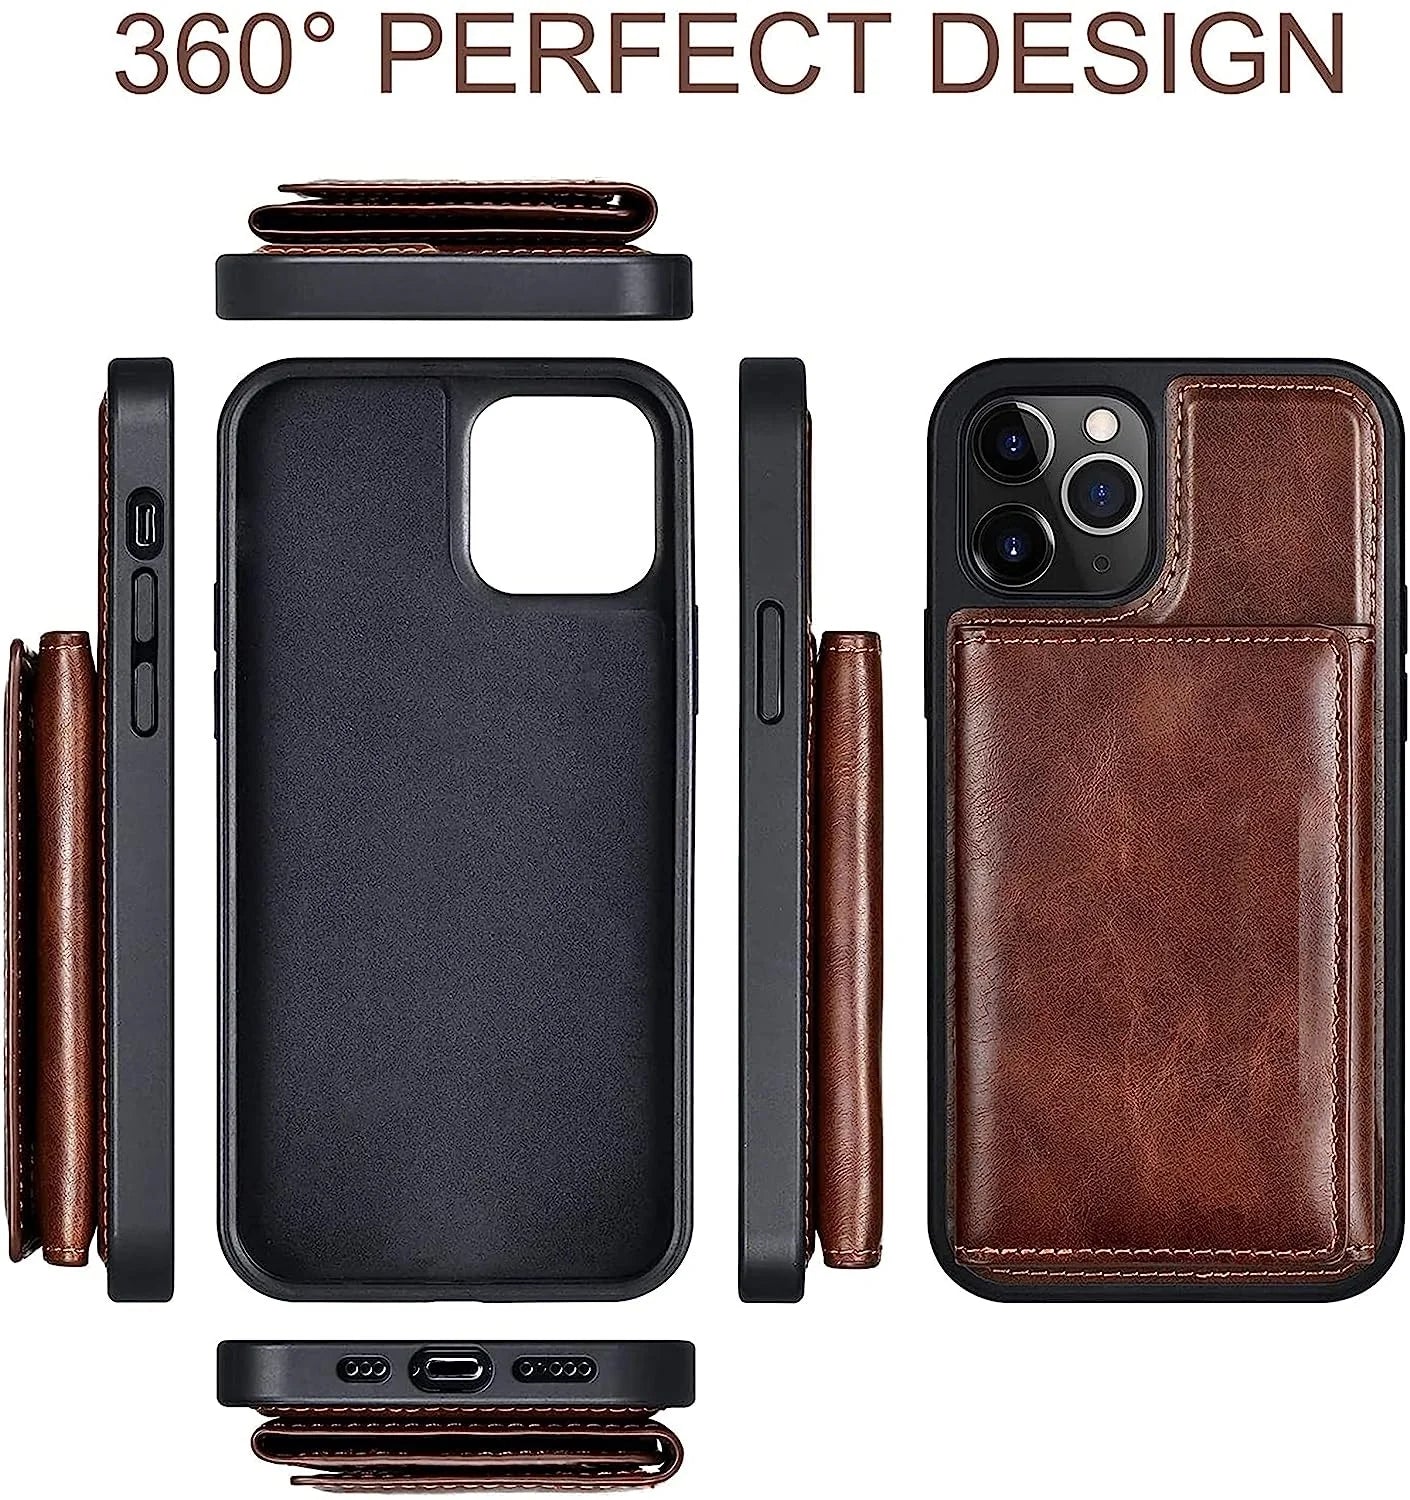 iPhone 13 Pro Max Premium Quality New Design Wallet Leather case